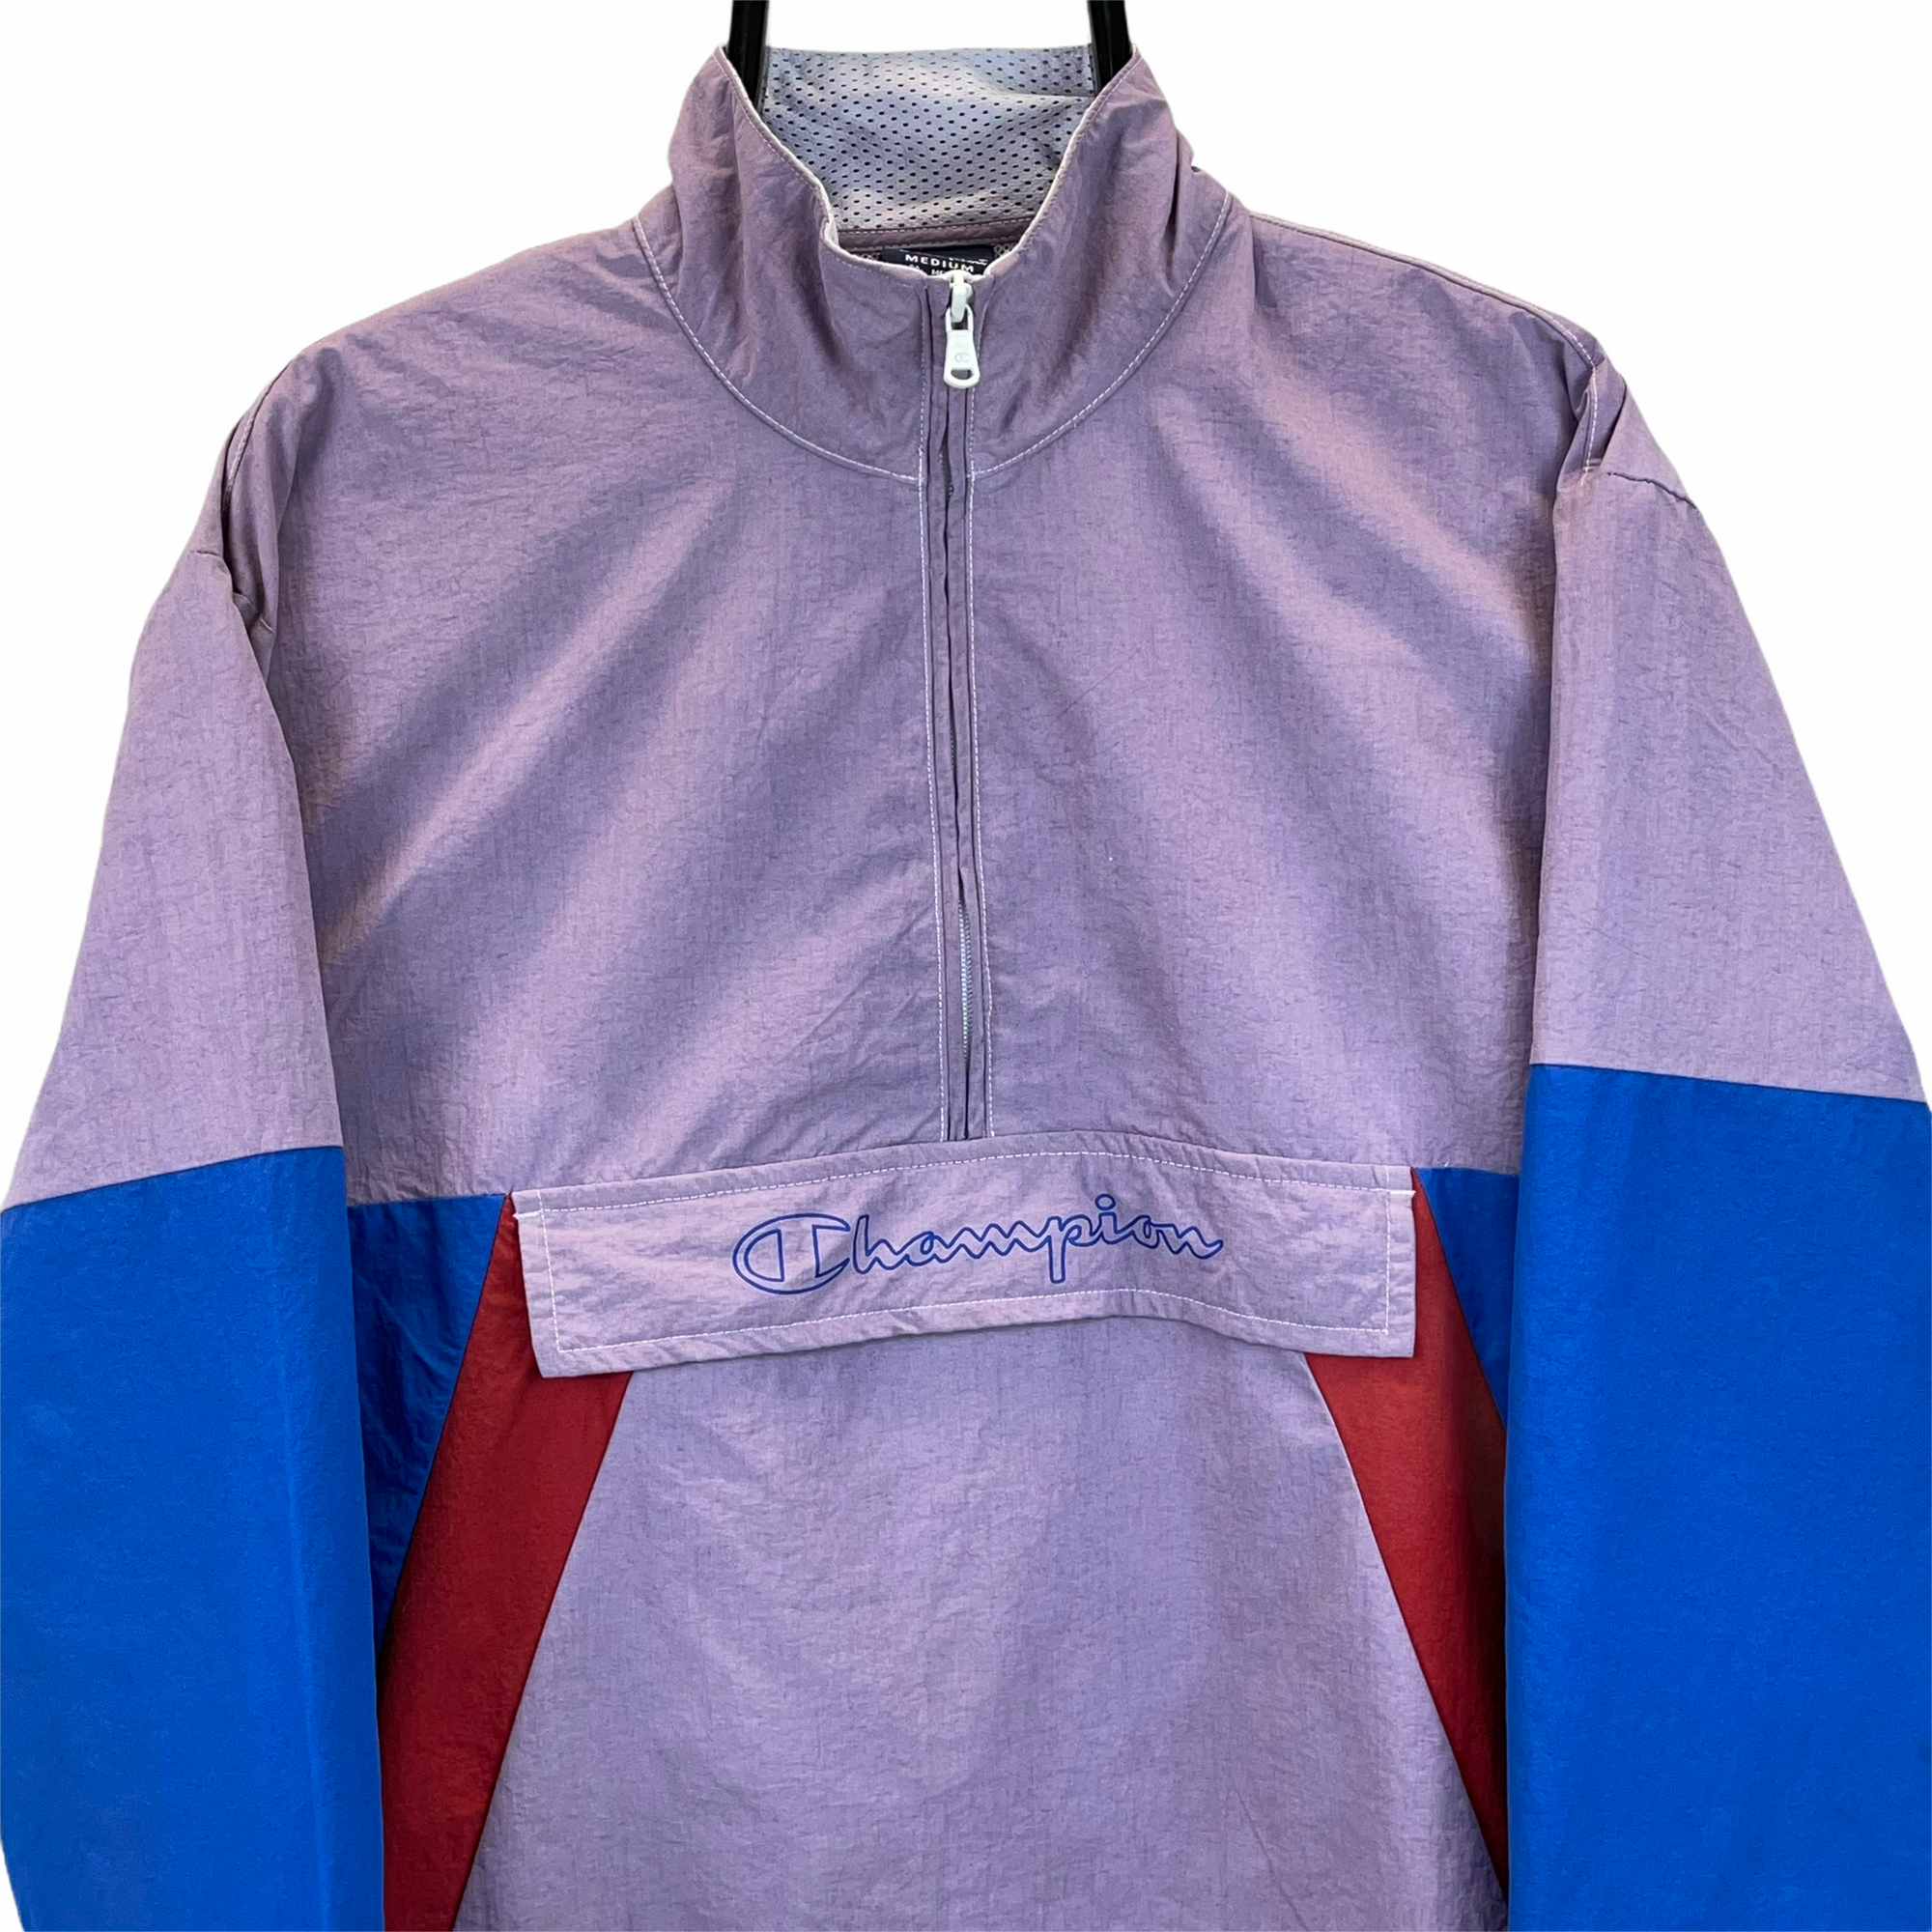 Vintage Champion Spellout 1/4 Zip Track Jacket - Men's Medium/Women's Large